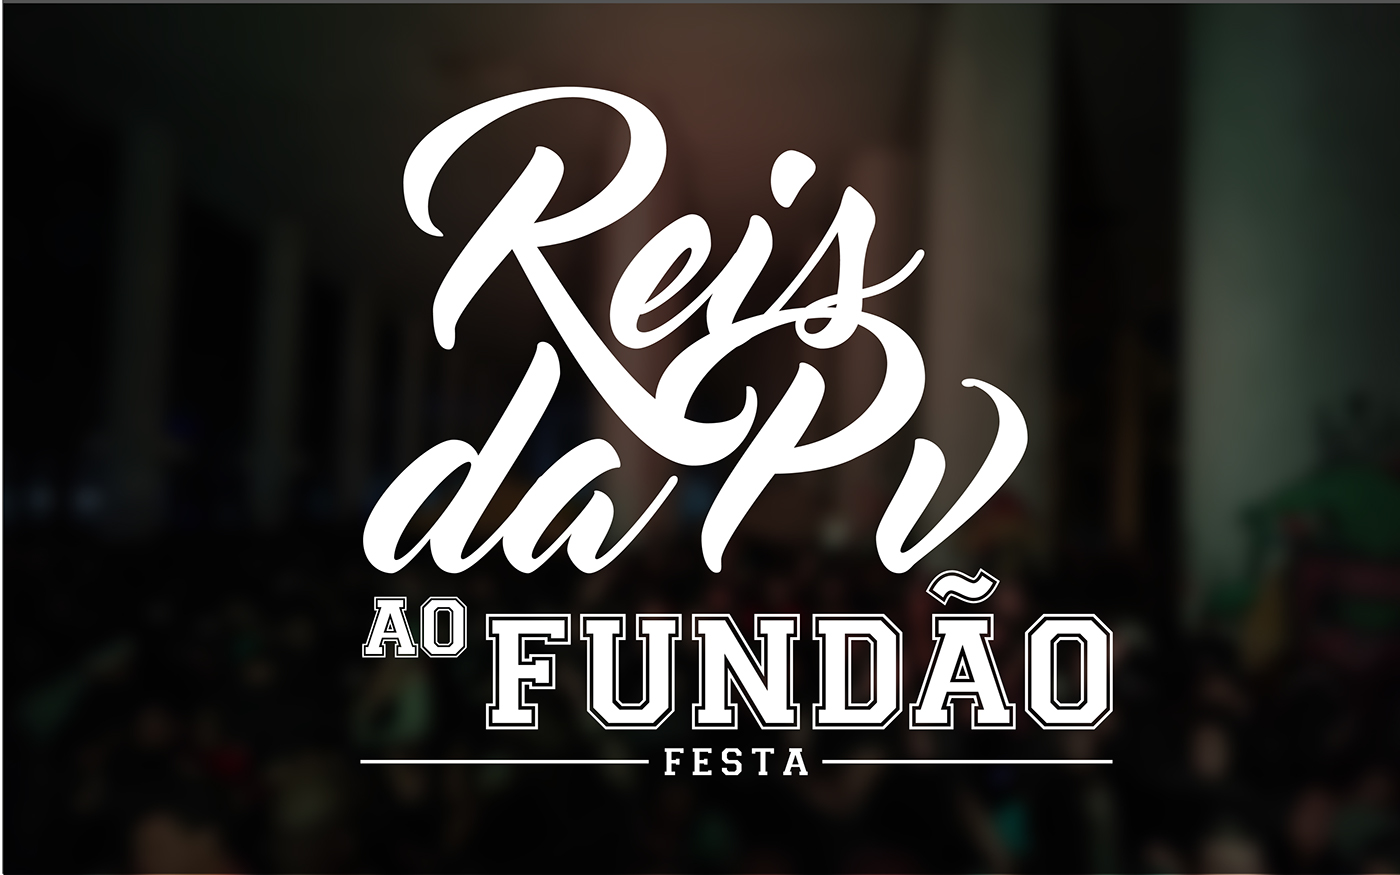 UFRJ PV eco EBA fau college party collegeparty beer skol Rio de Janeiro atletica